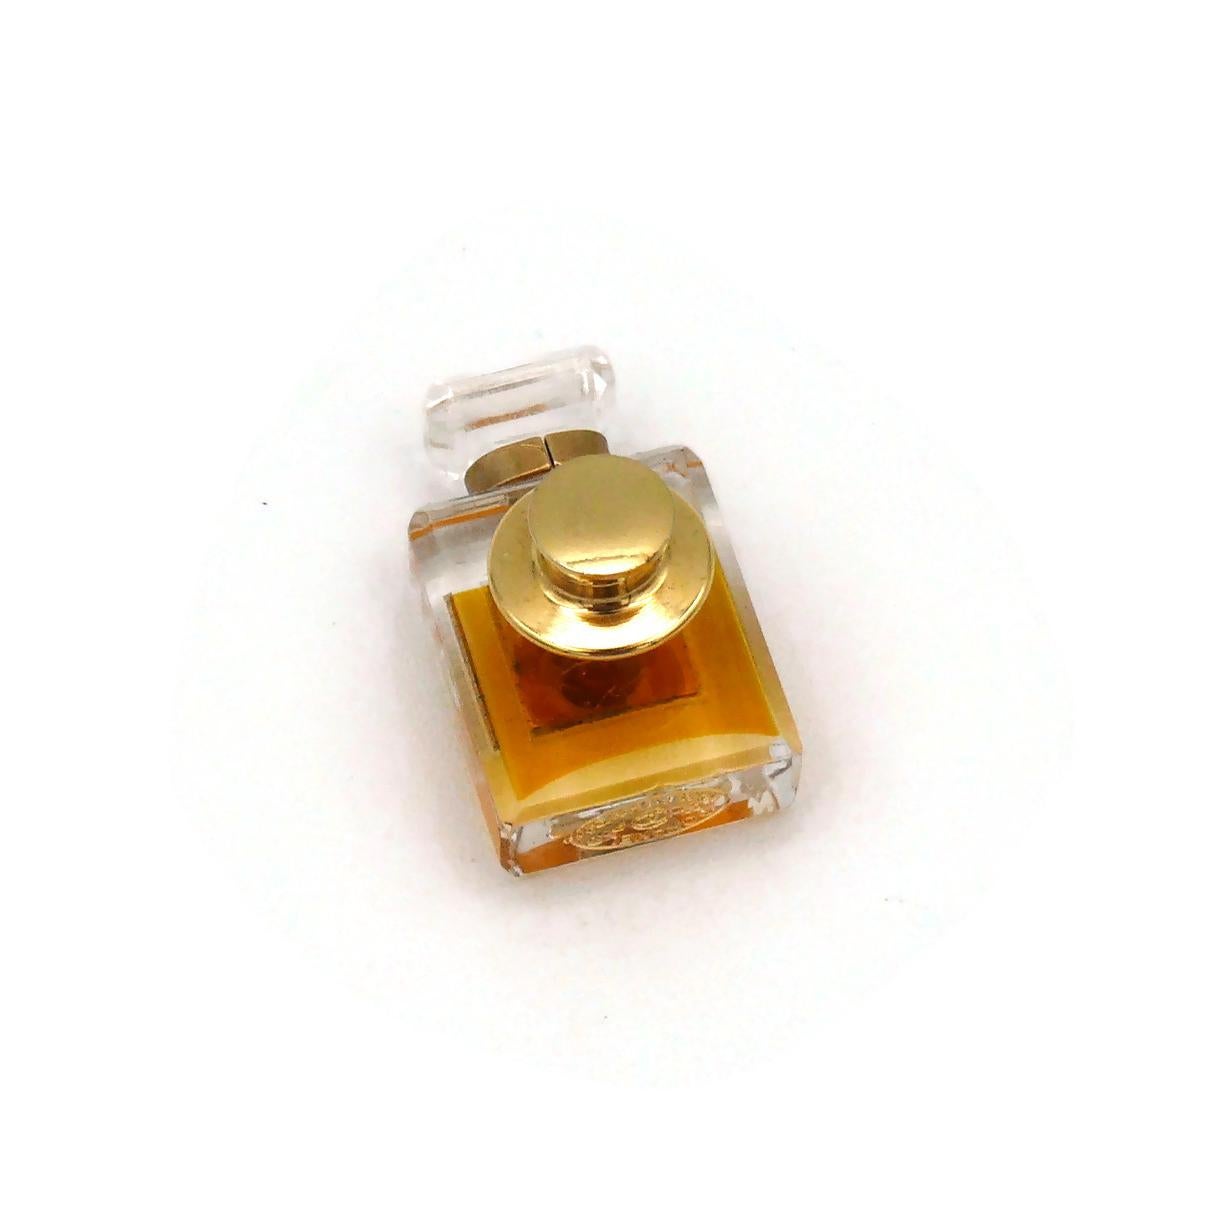 Women's or Men's Chanel Iconic No. 5 Perfume Bottle Pin Brooch